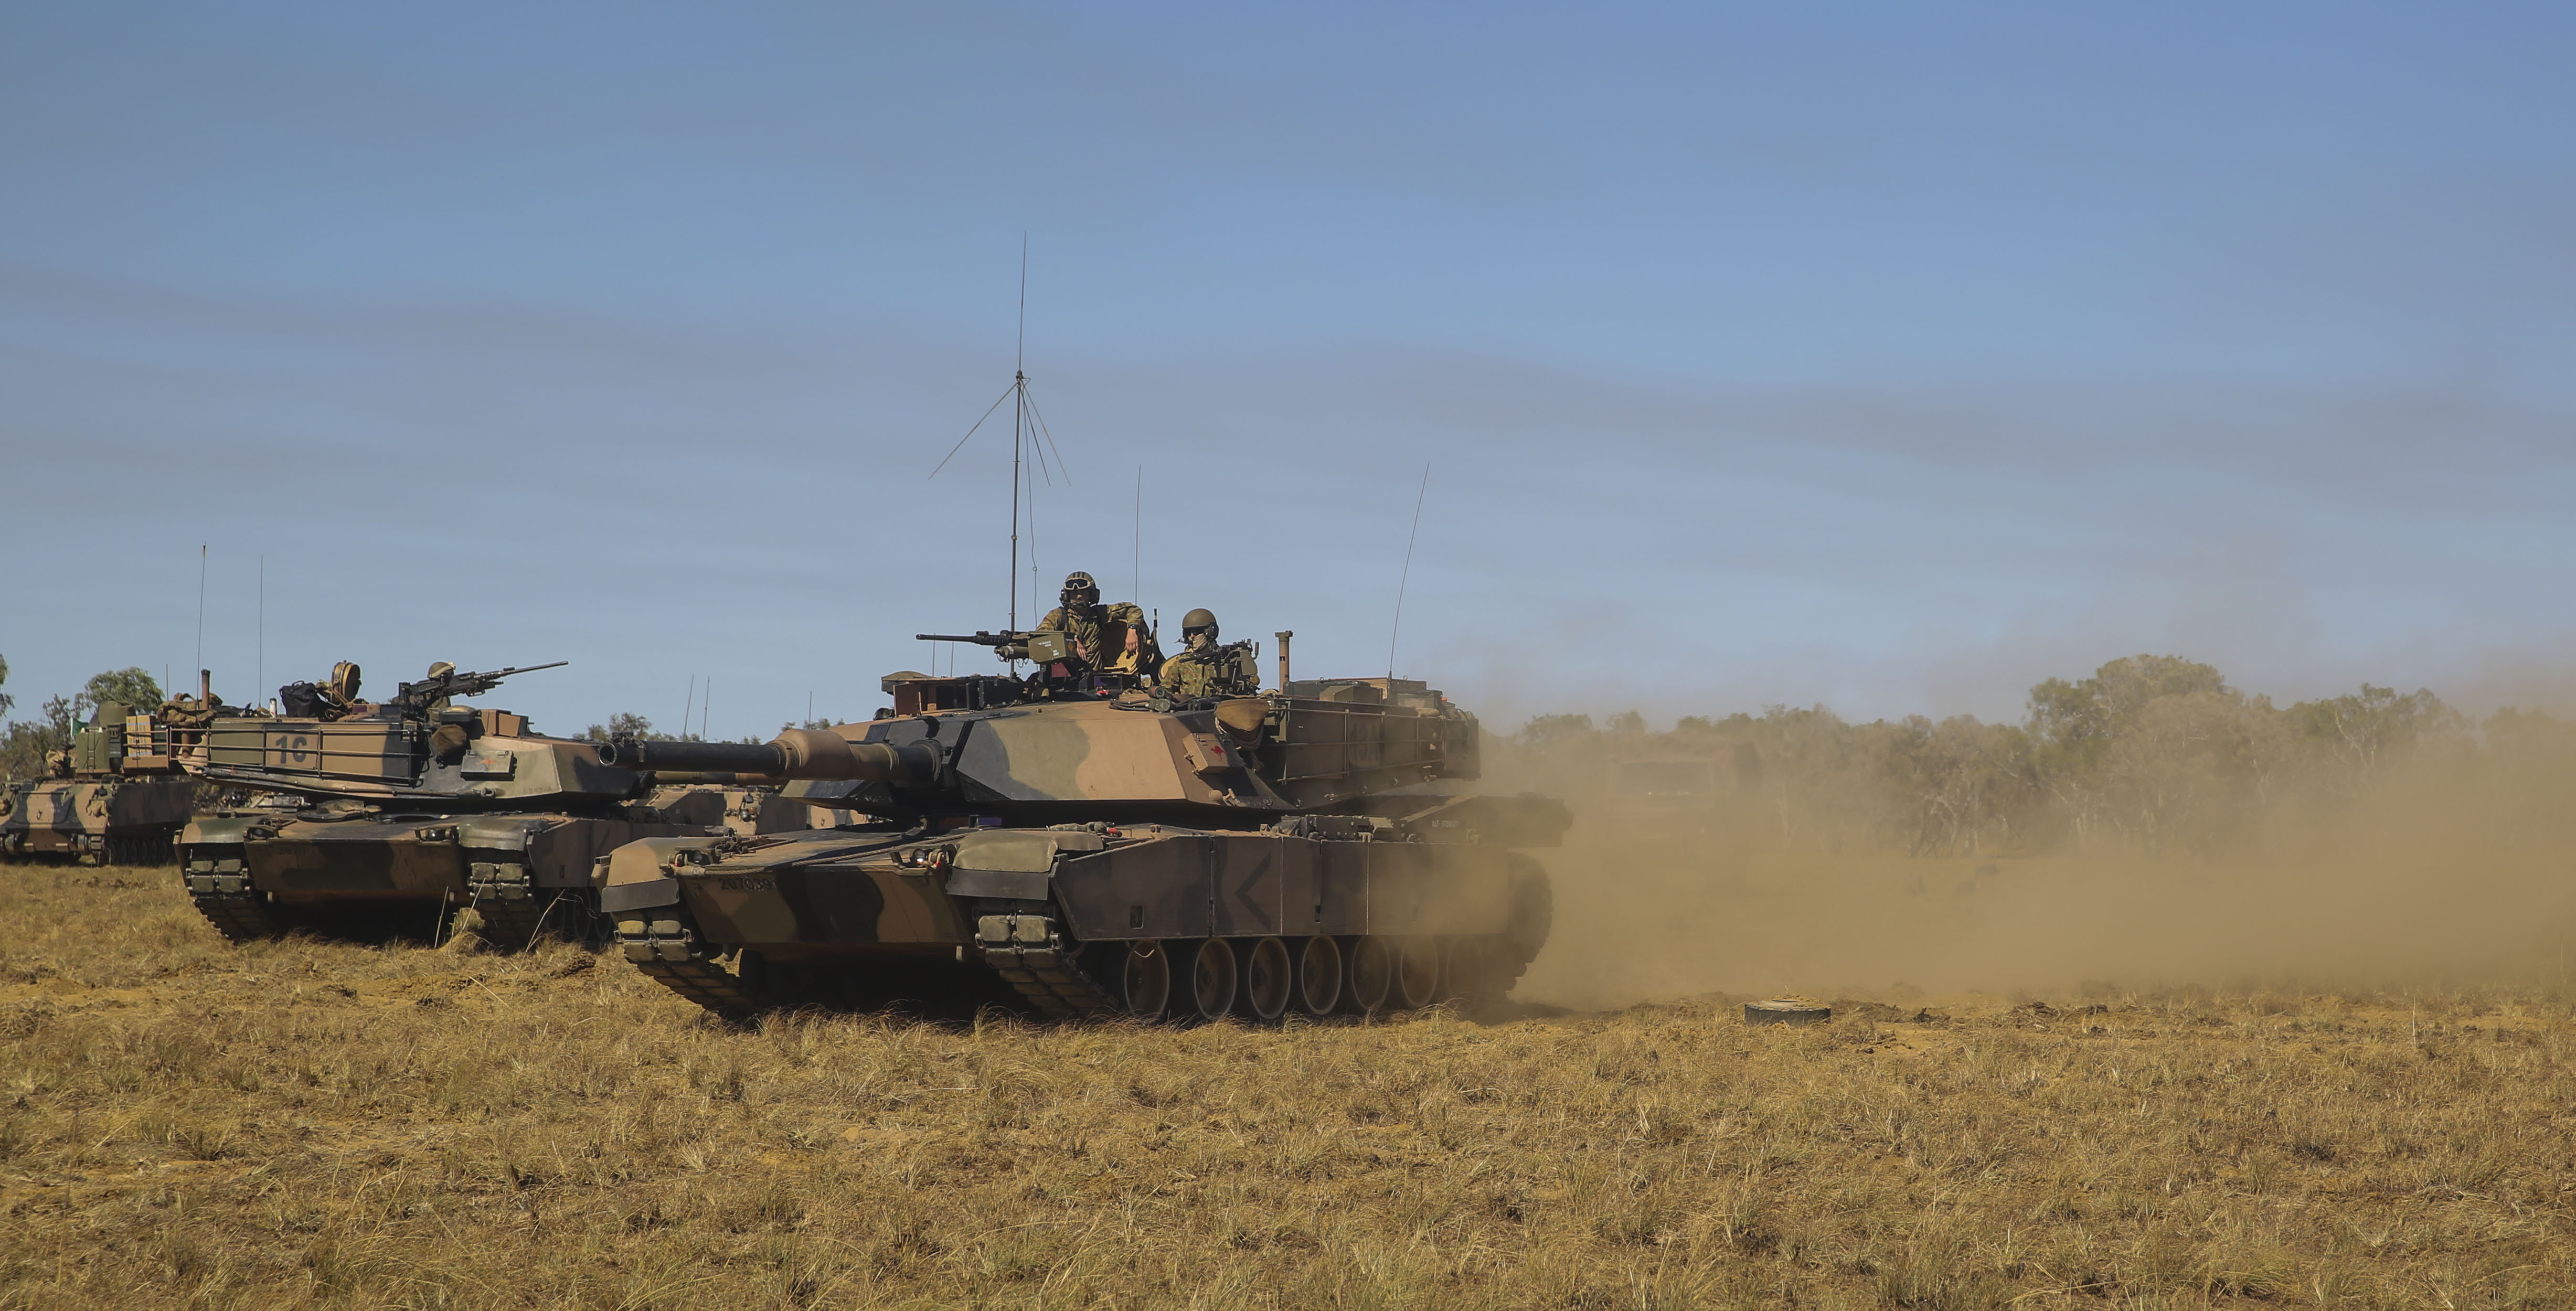 Australian_Army_Abrams_tanks_during_Exercise_Koolendong_at_Bradshaw_Training_Area,_Aug_21,_2014.jpg